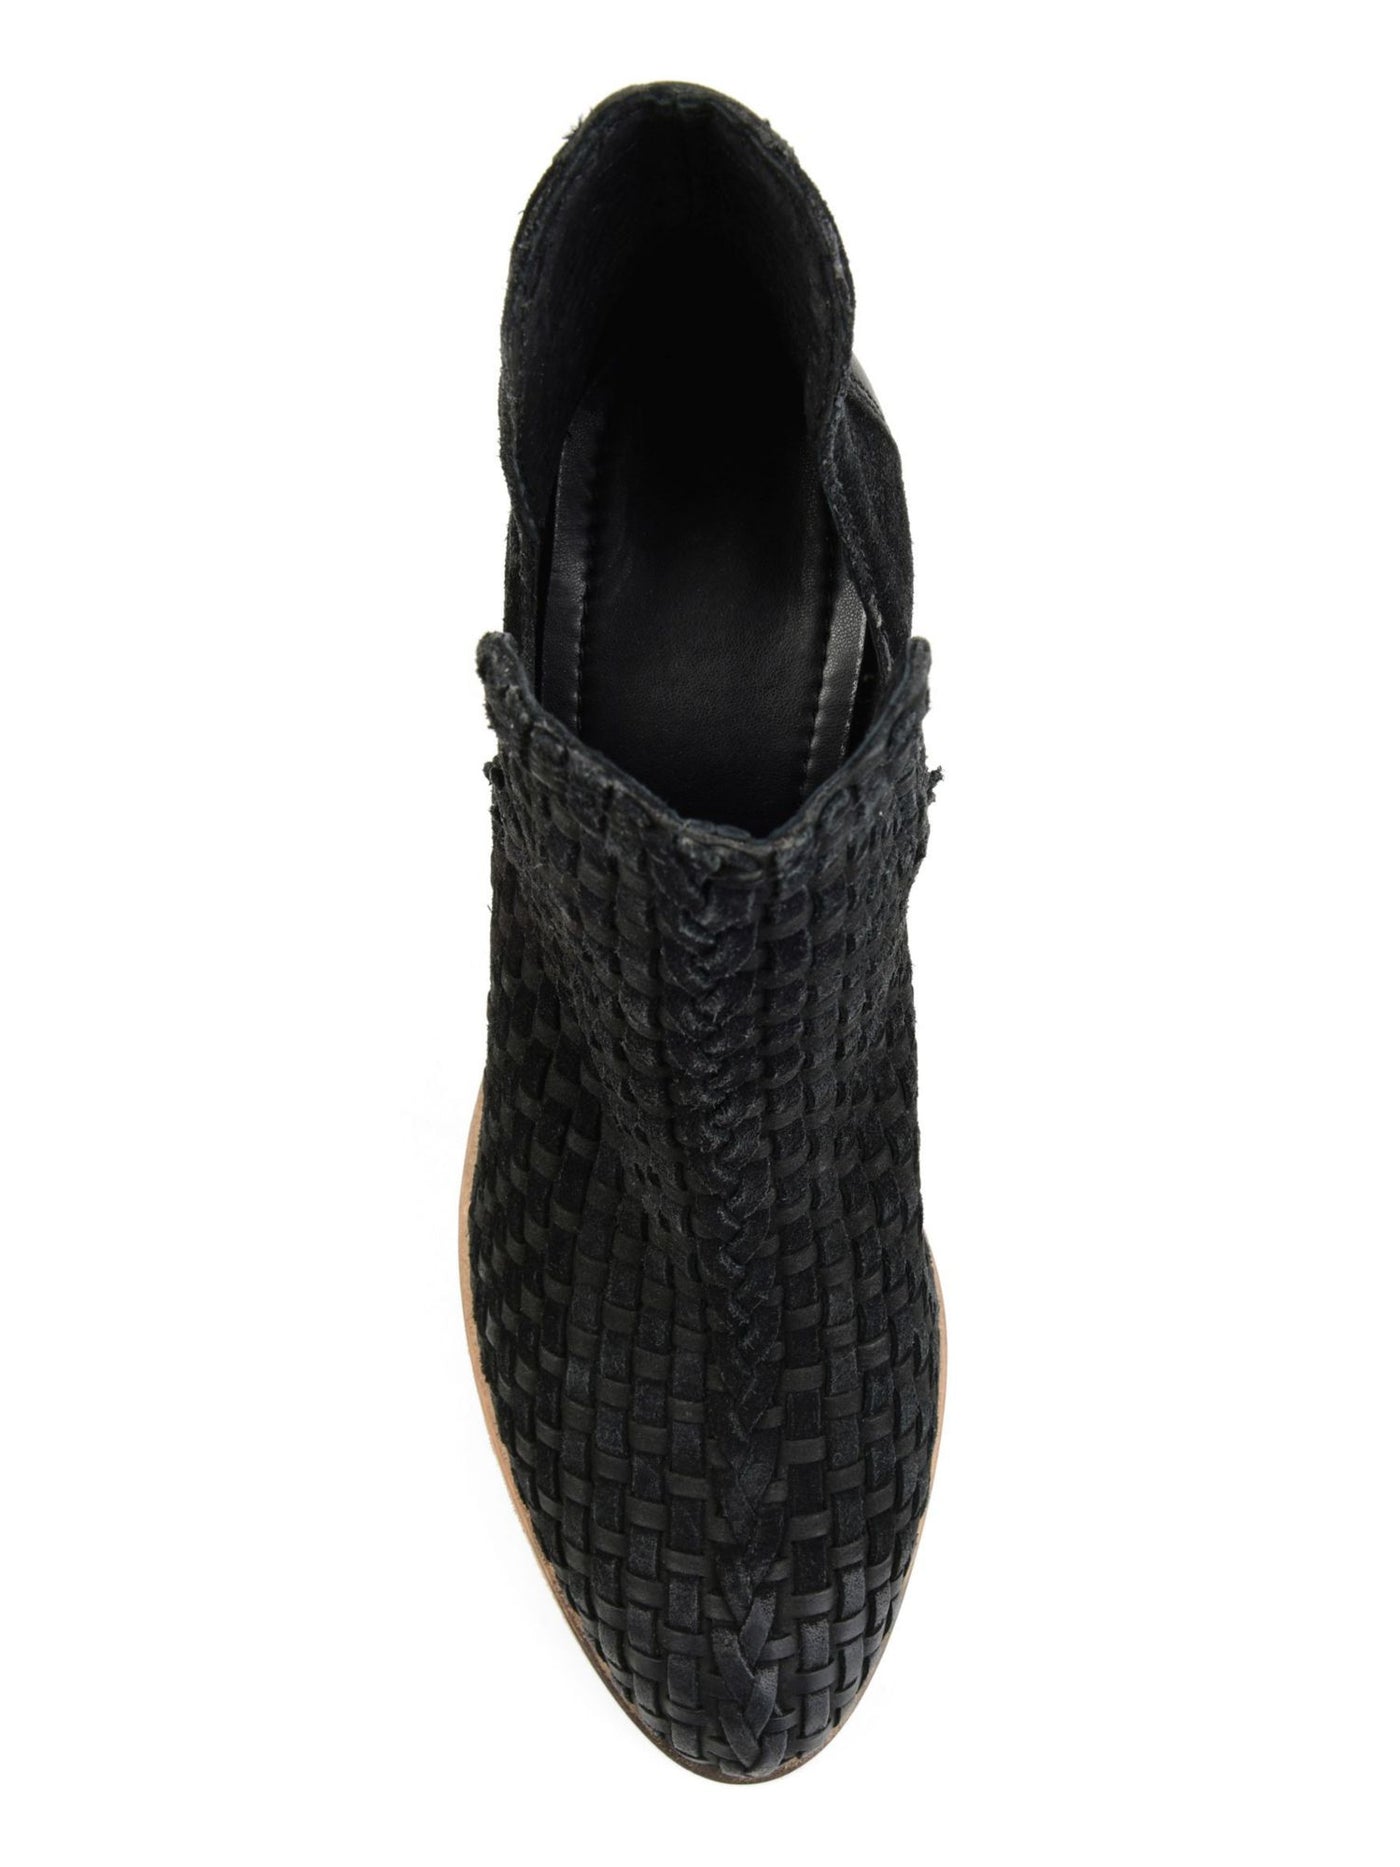 JOURNEE SIGNATURE Womens Black Side Cutouts Woven Padded Kevona Almond Toe Block Heel Slip On Leather Booties 7.5 M